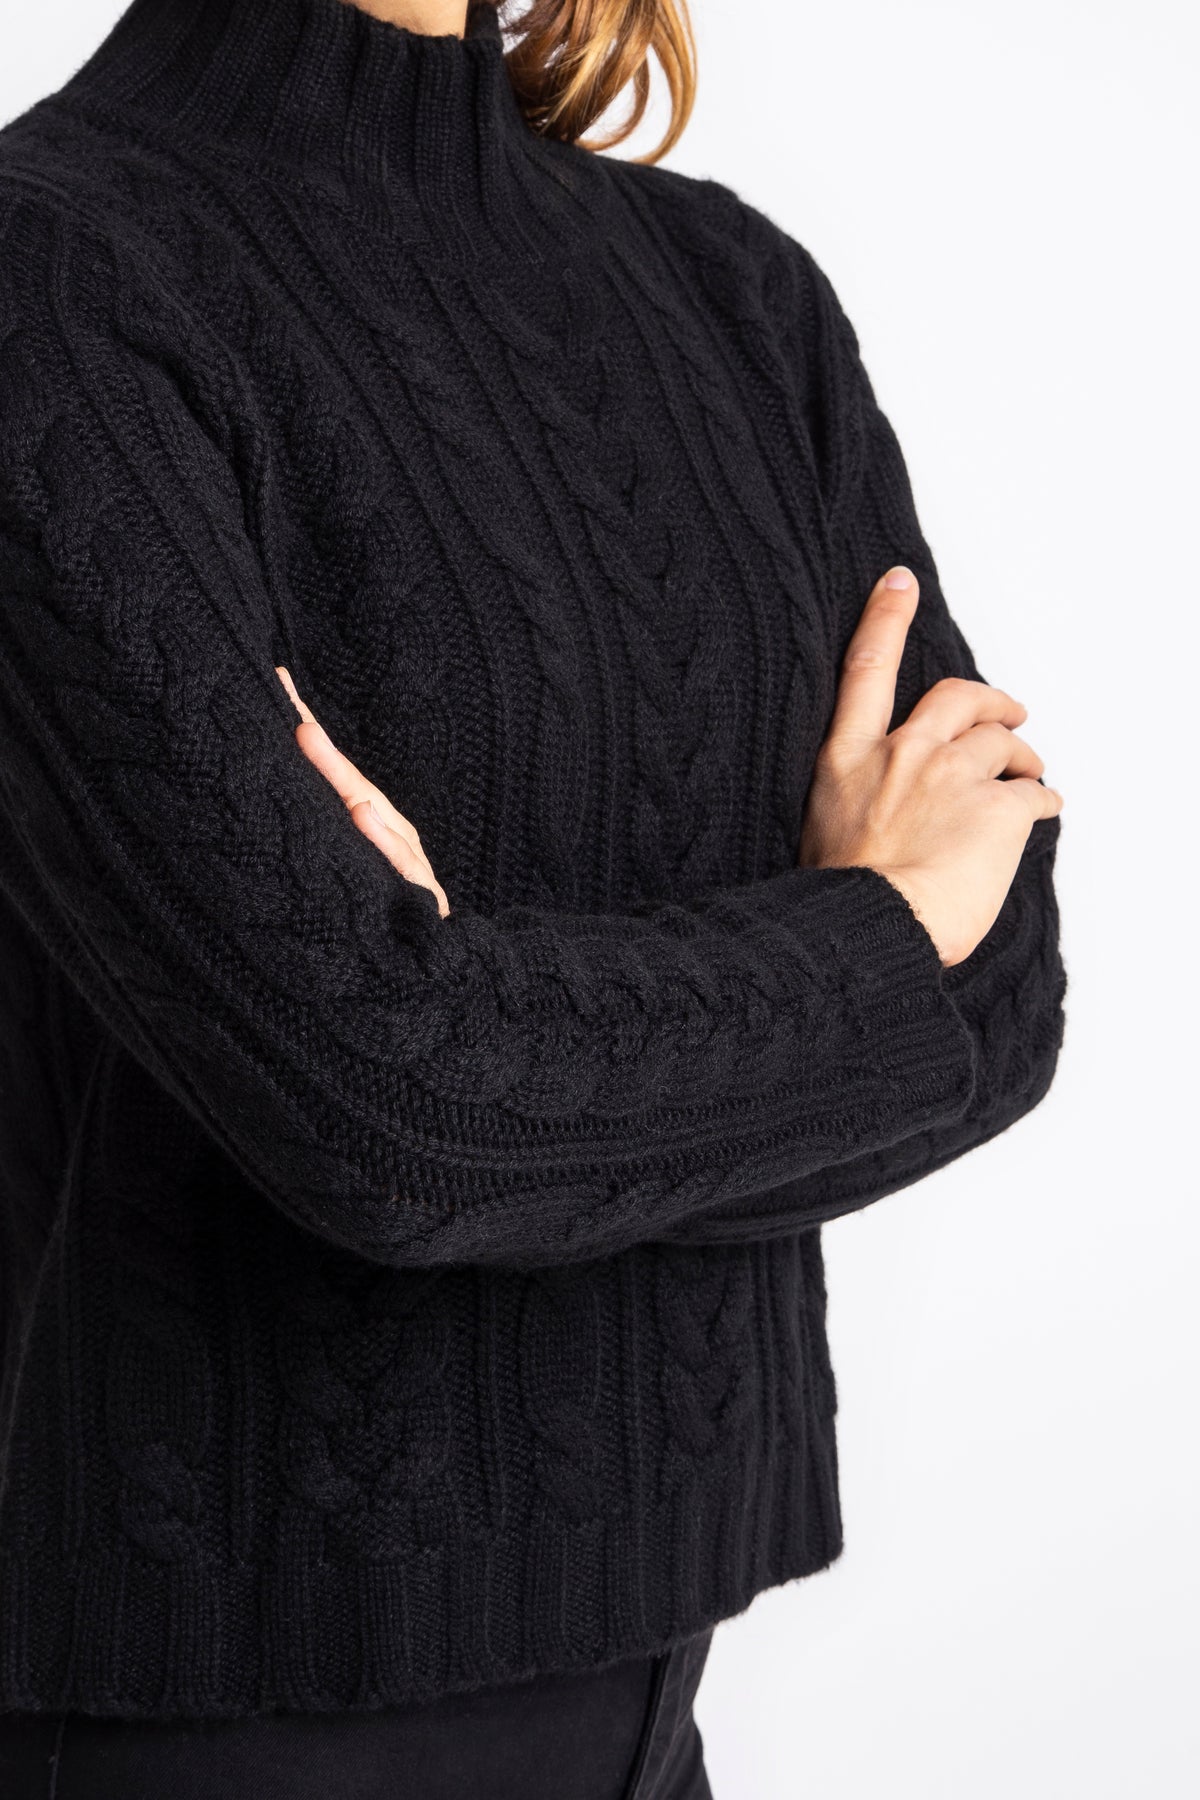 Cashmere Lauren Cable knit in Black